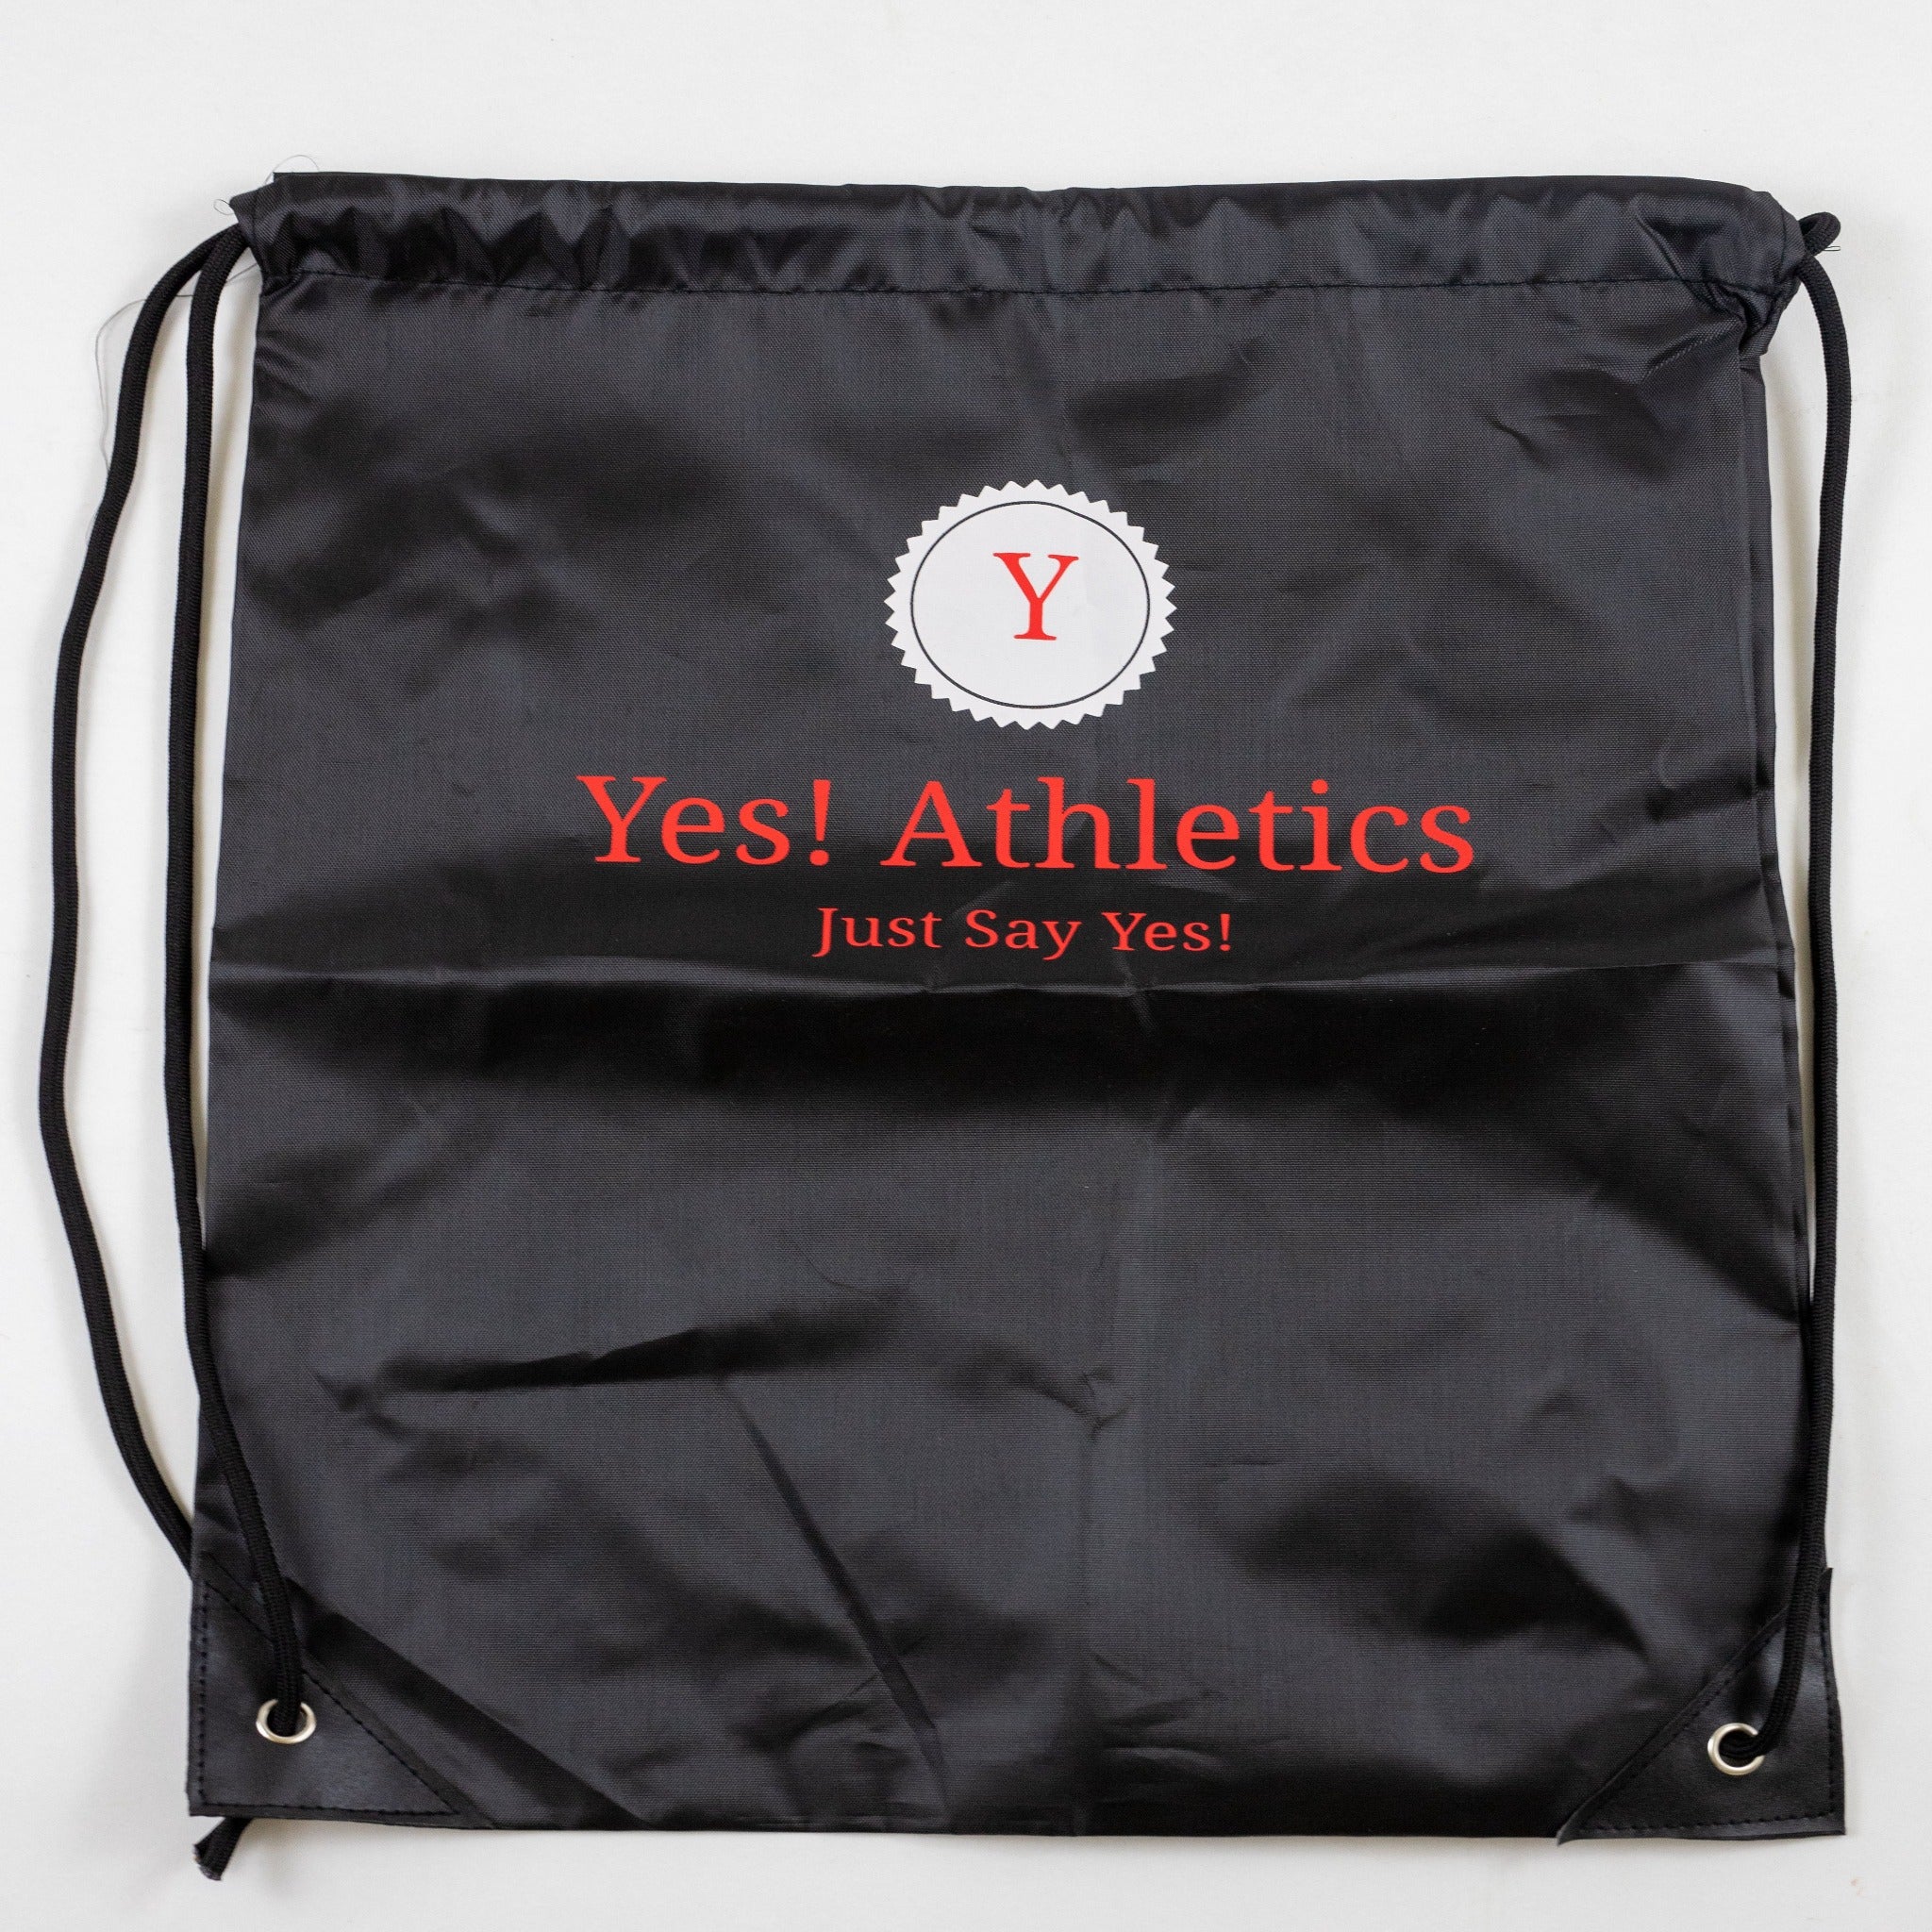 Yes! Athletics gym bag